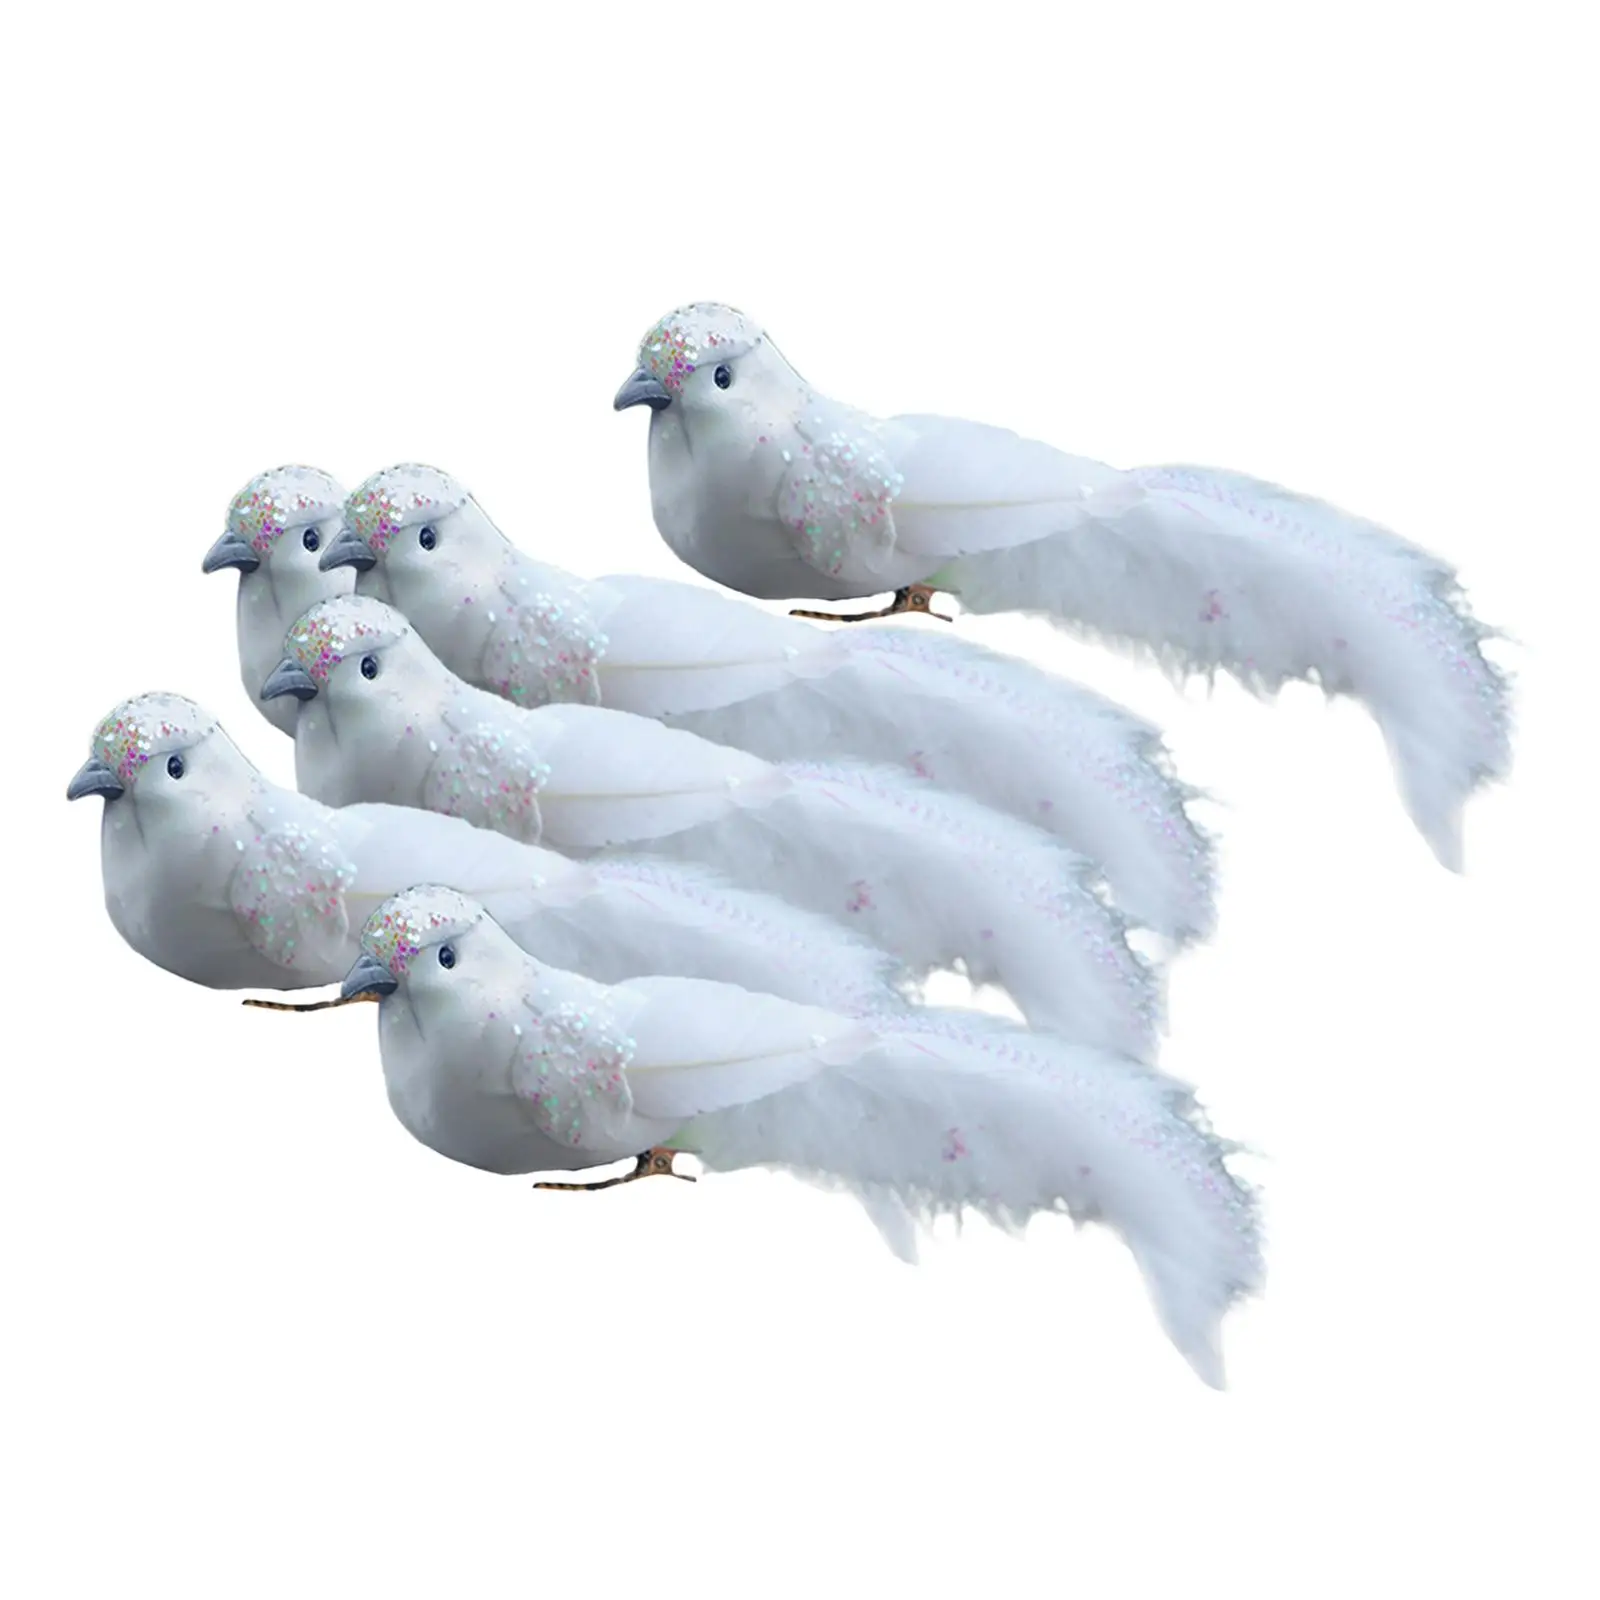 6x Lifelike Feathered Birds Decorative Sculpture Simulation Garden Figurine Realistic Foam Birds for Garden Window Decorations